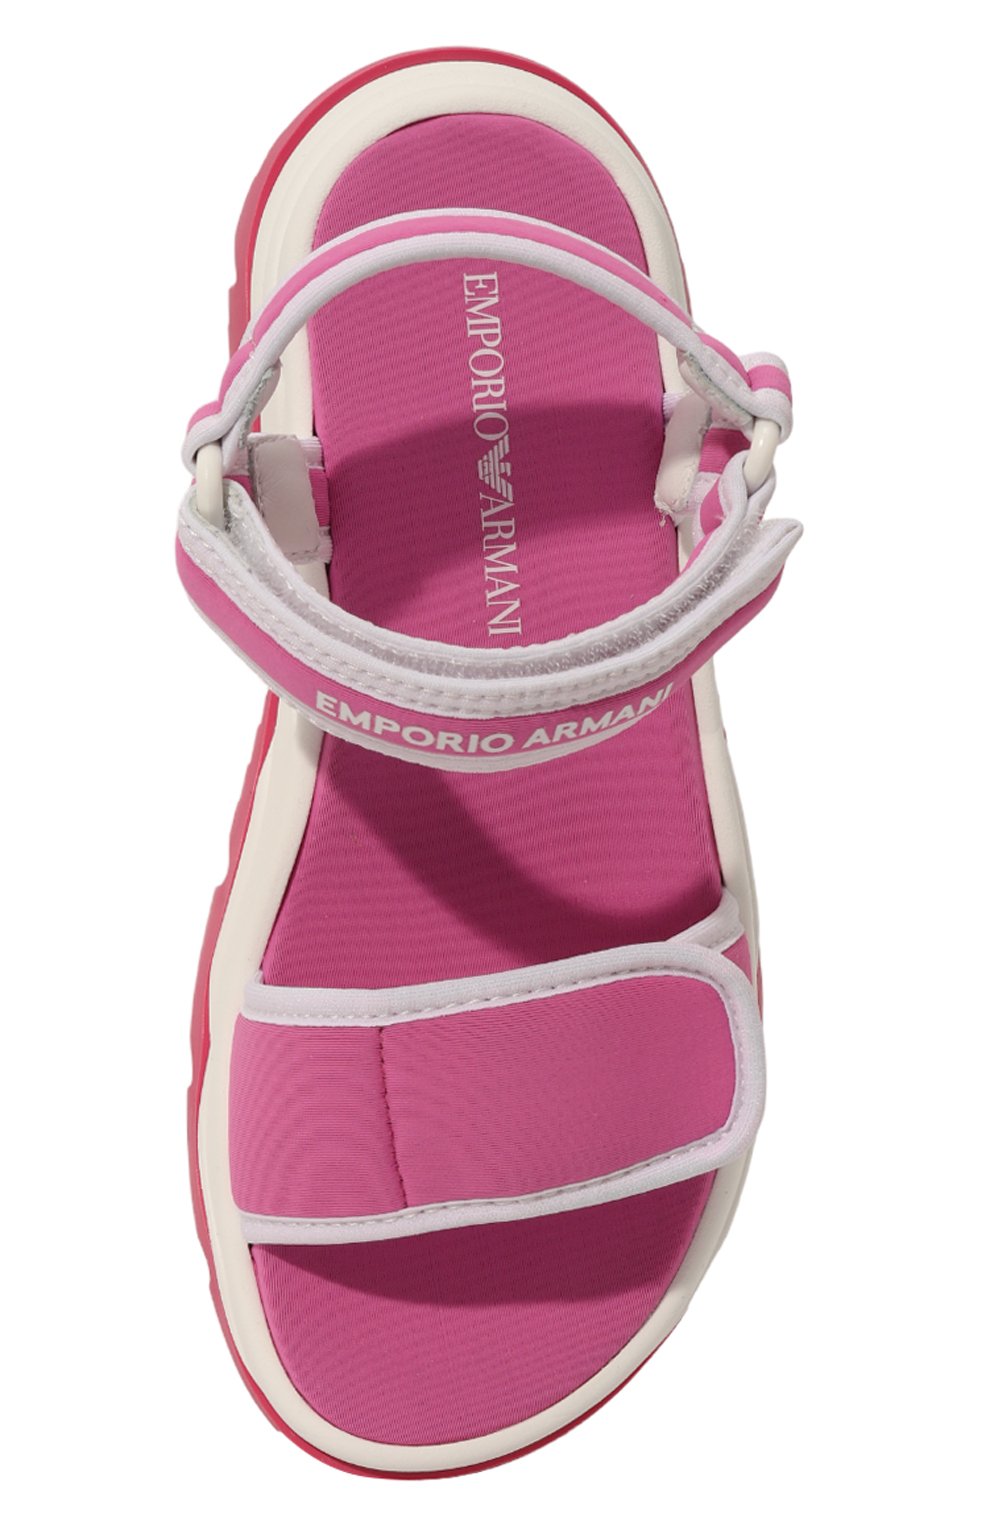 Детские сандалии EMPORIO ARMANI розового цвета, арт. XYP007/X0T69/28-34 | Фото 4 (Материал внешний: Текстиль; Материал сплава: Проставлено; Нос: Не проставлено; Материал внутренний: Текстиль)